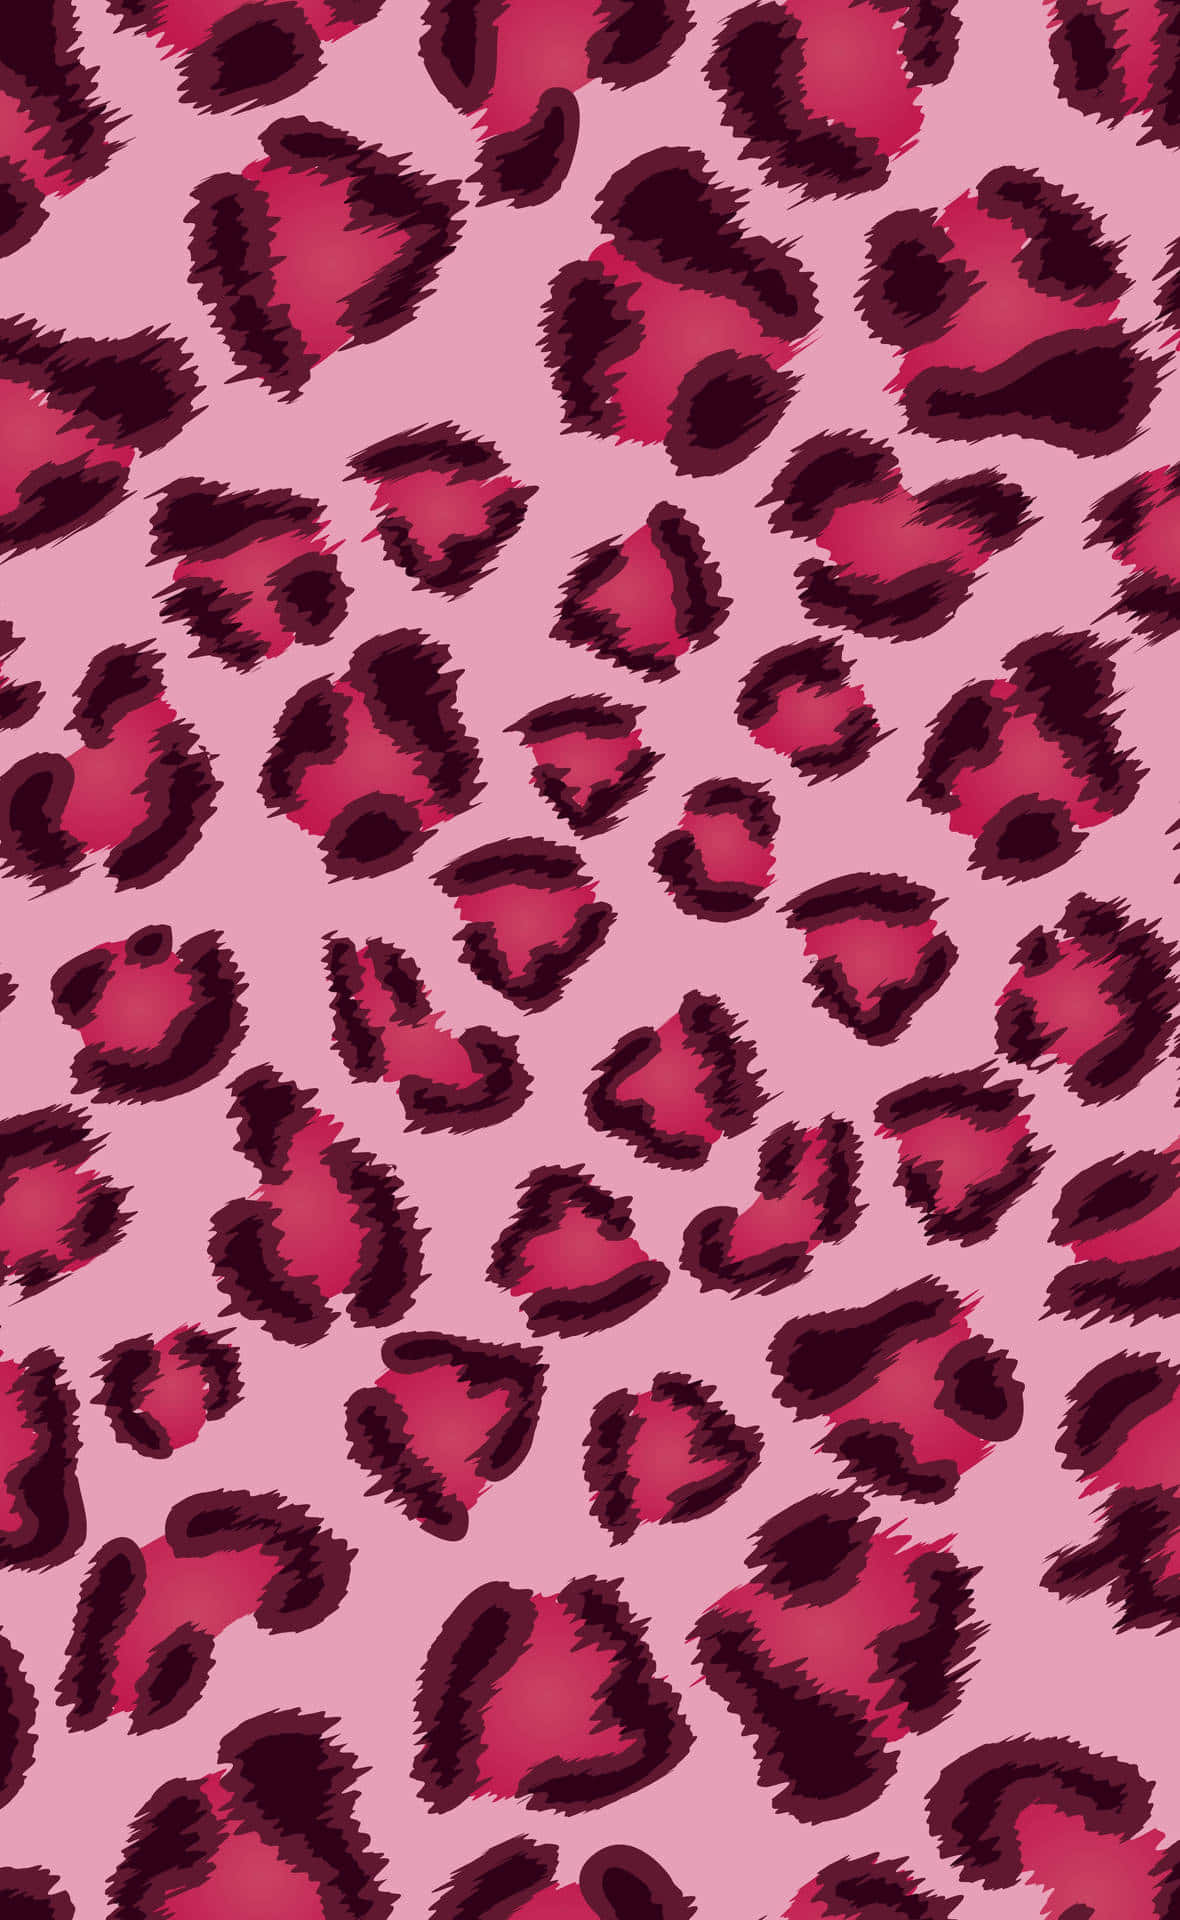 Striking Cheetah Print in Deep Fuchsia Aesthetics Wallpaper